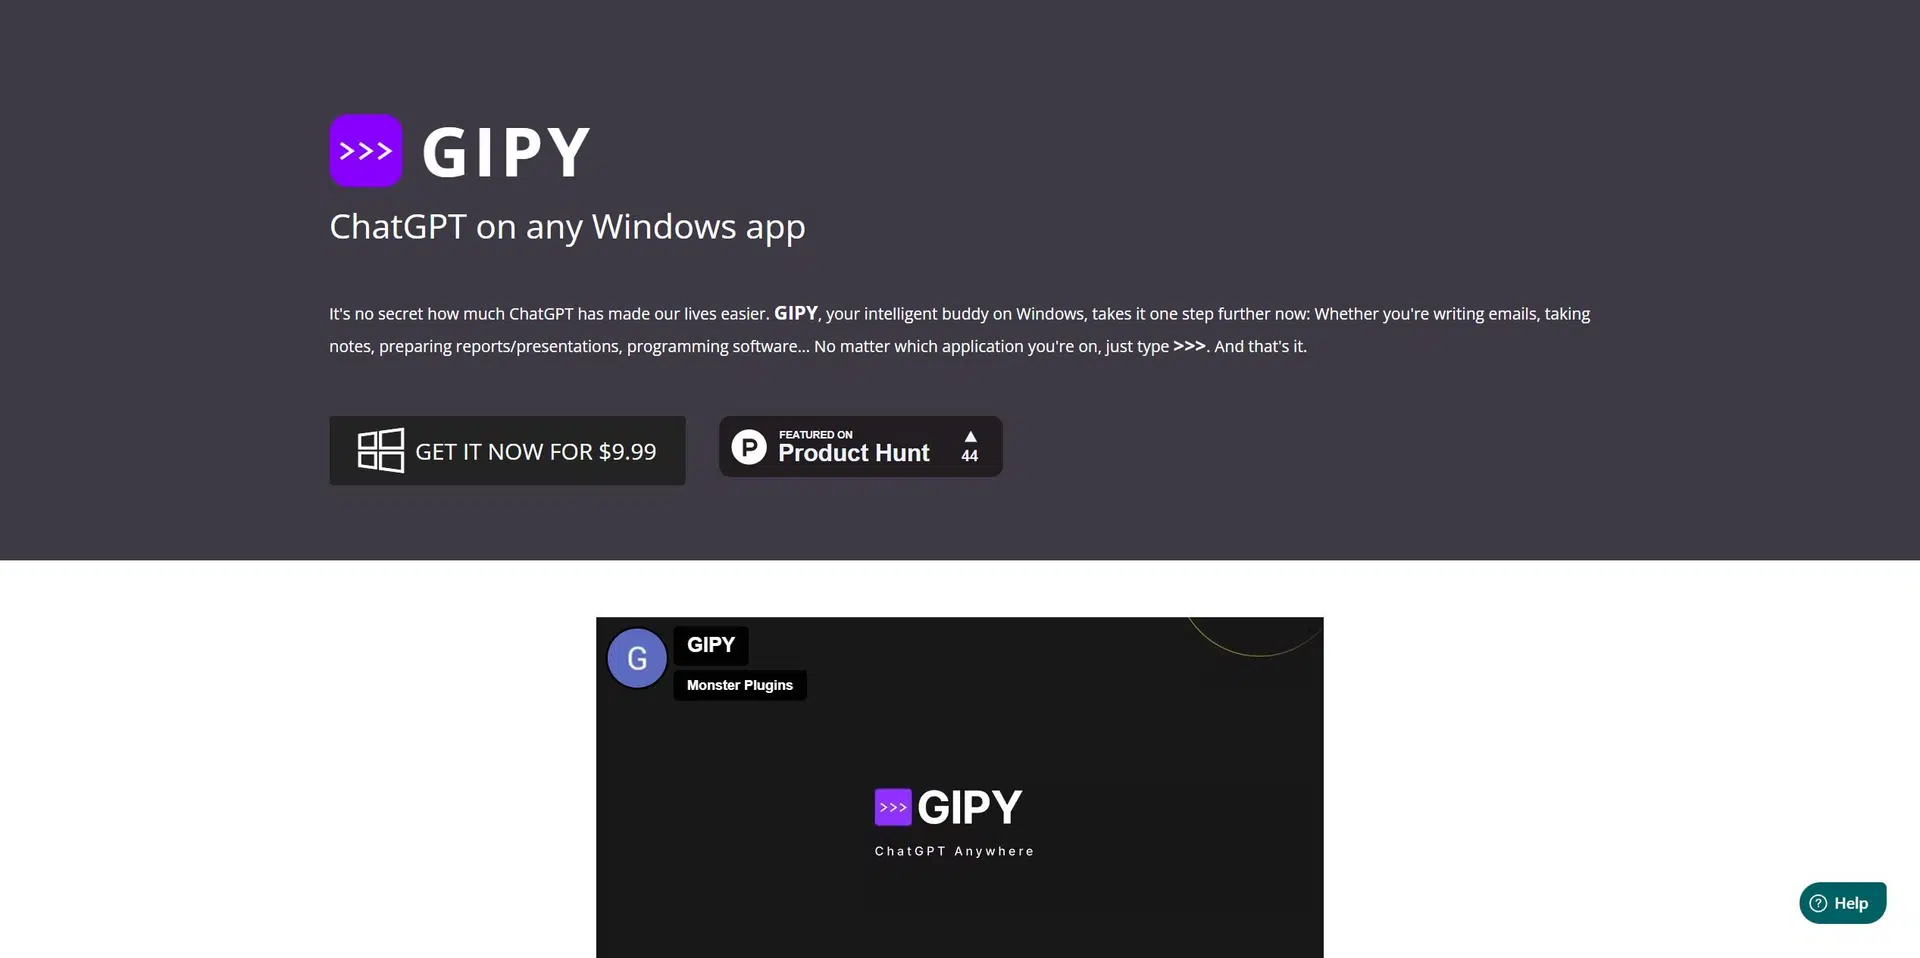 GIPYwebsite picture